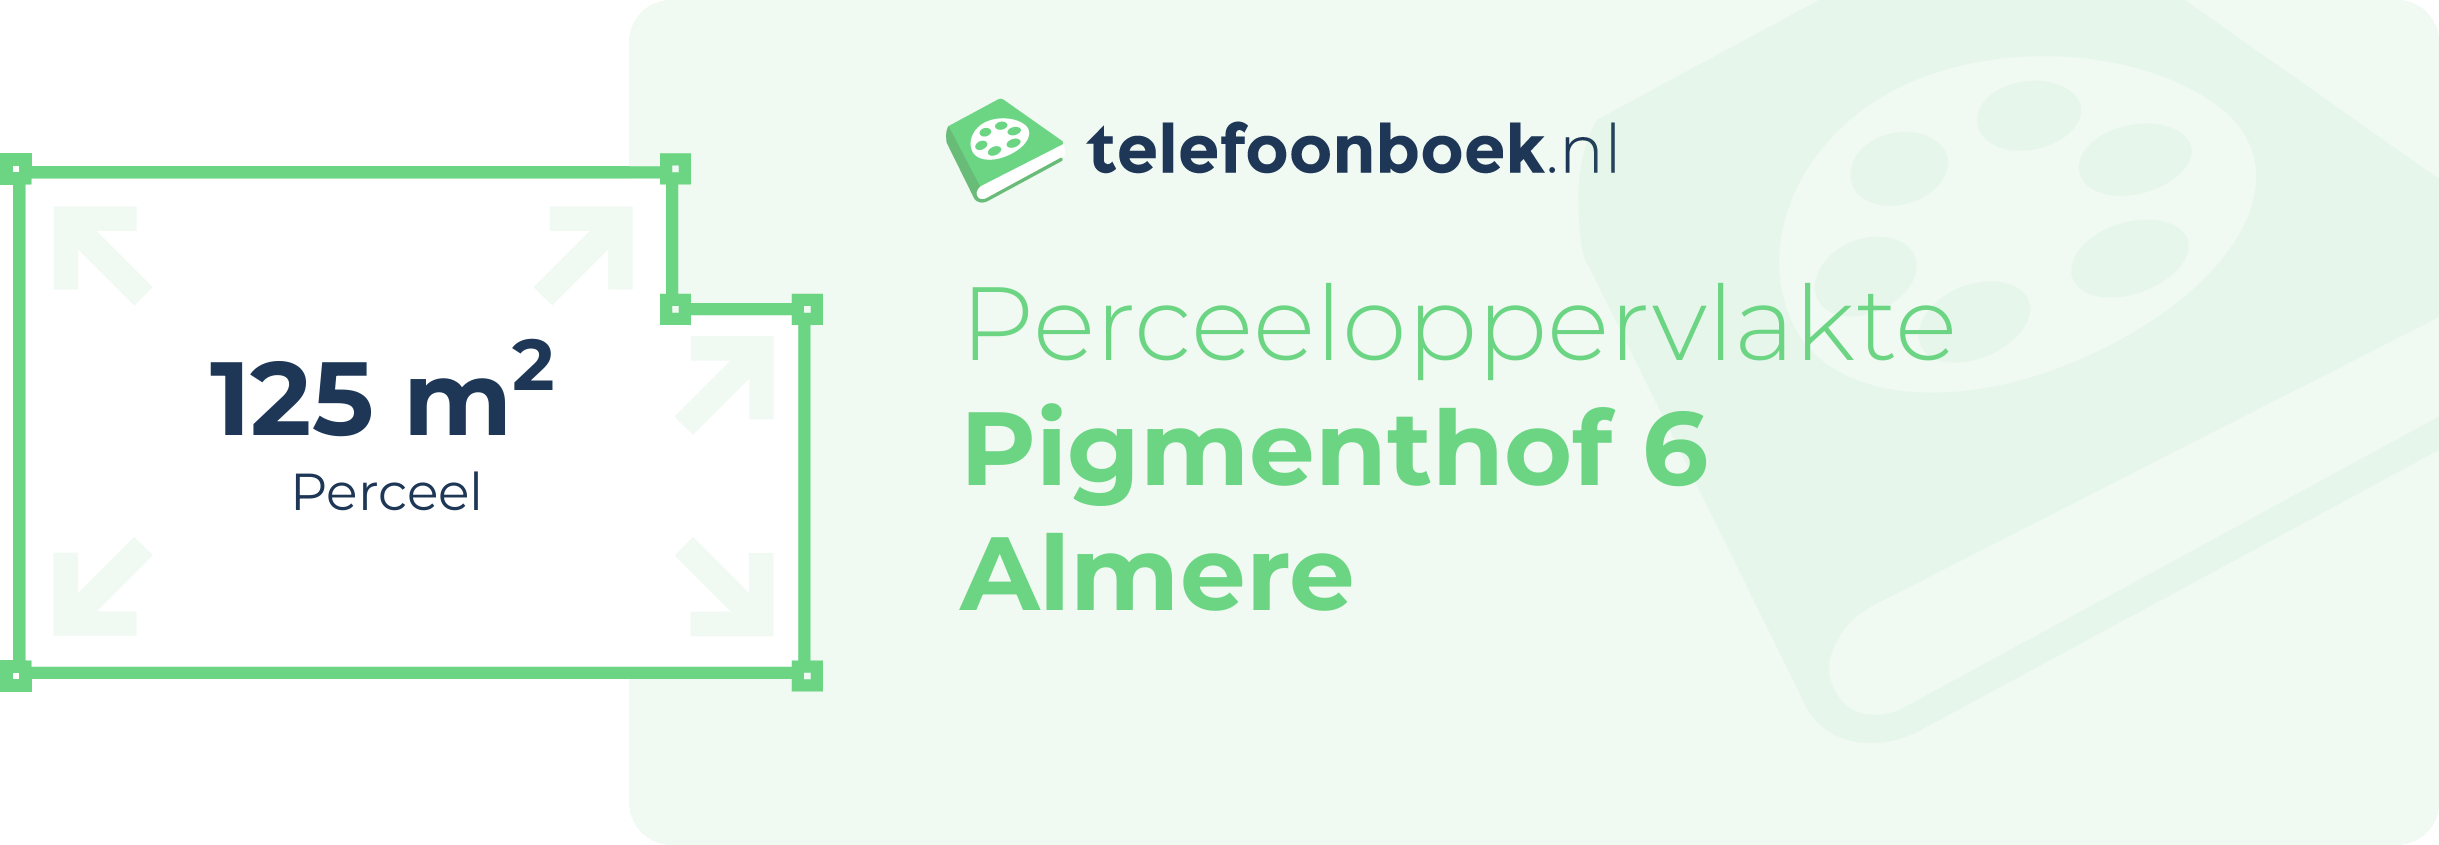 Perceeloppervlakte Pigmenthof 6 Almere